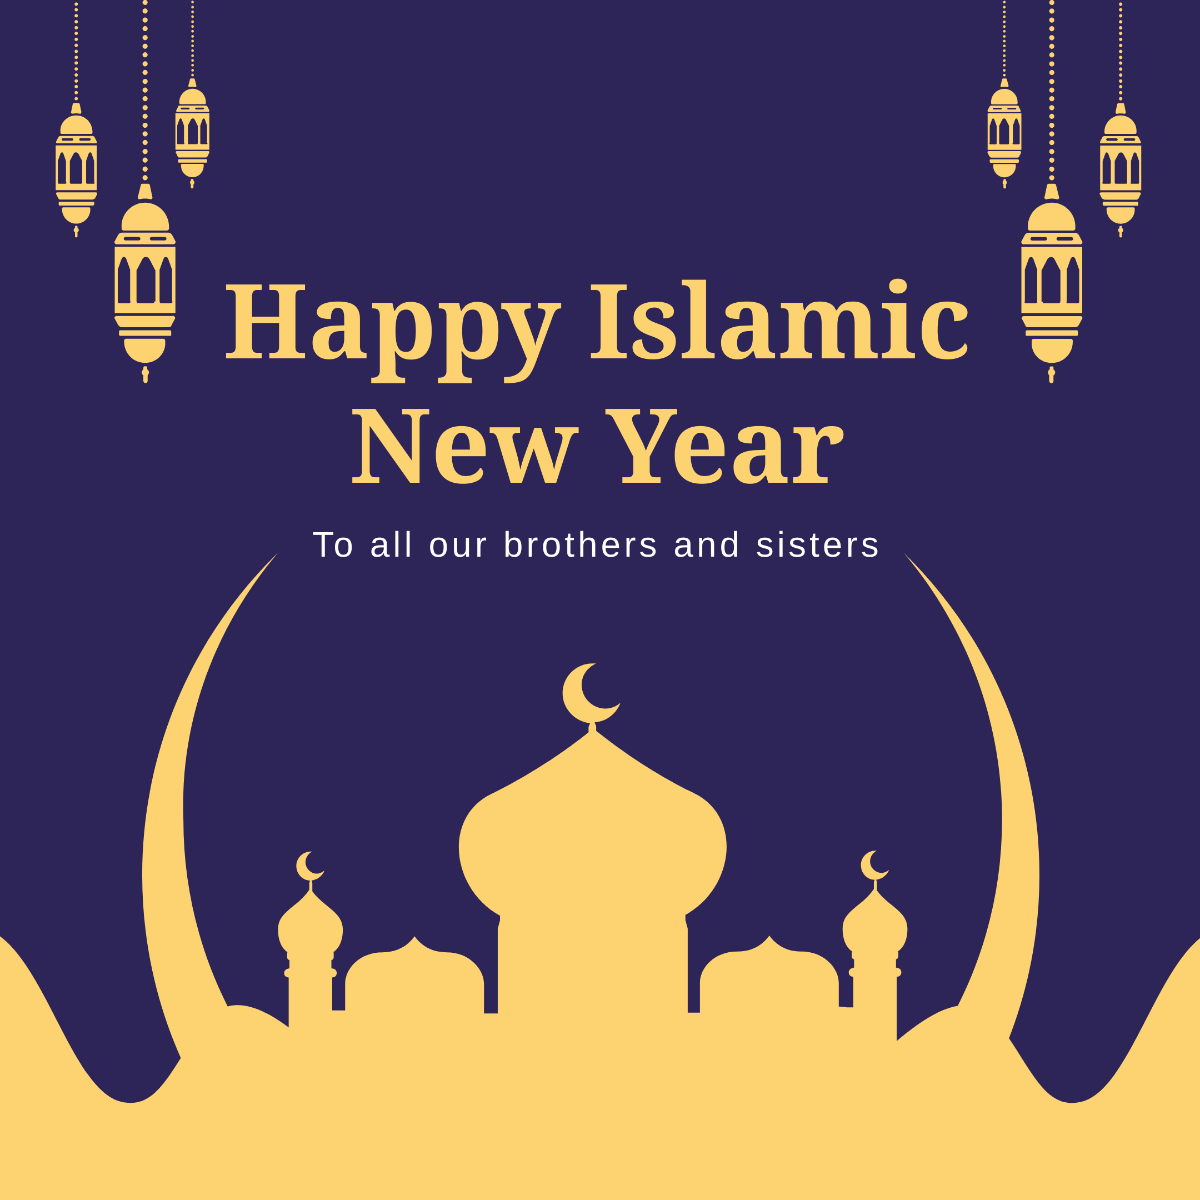 Islamic New Year Instagram Post